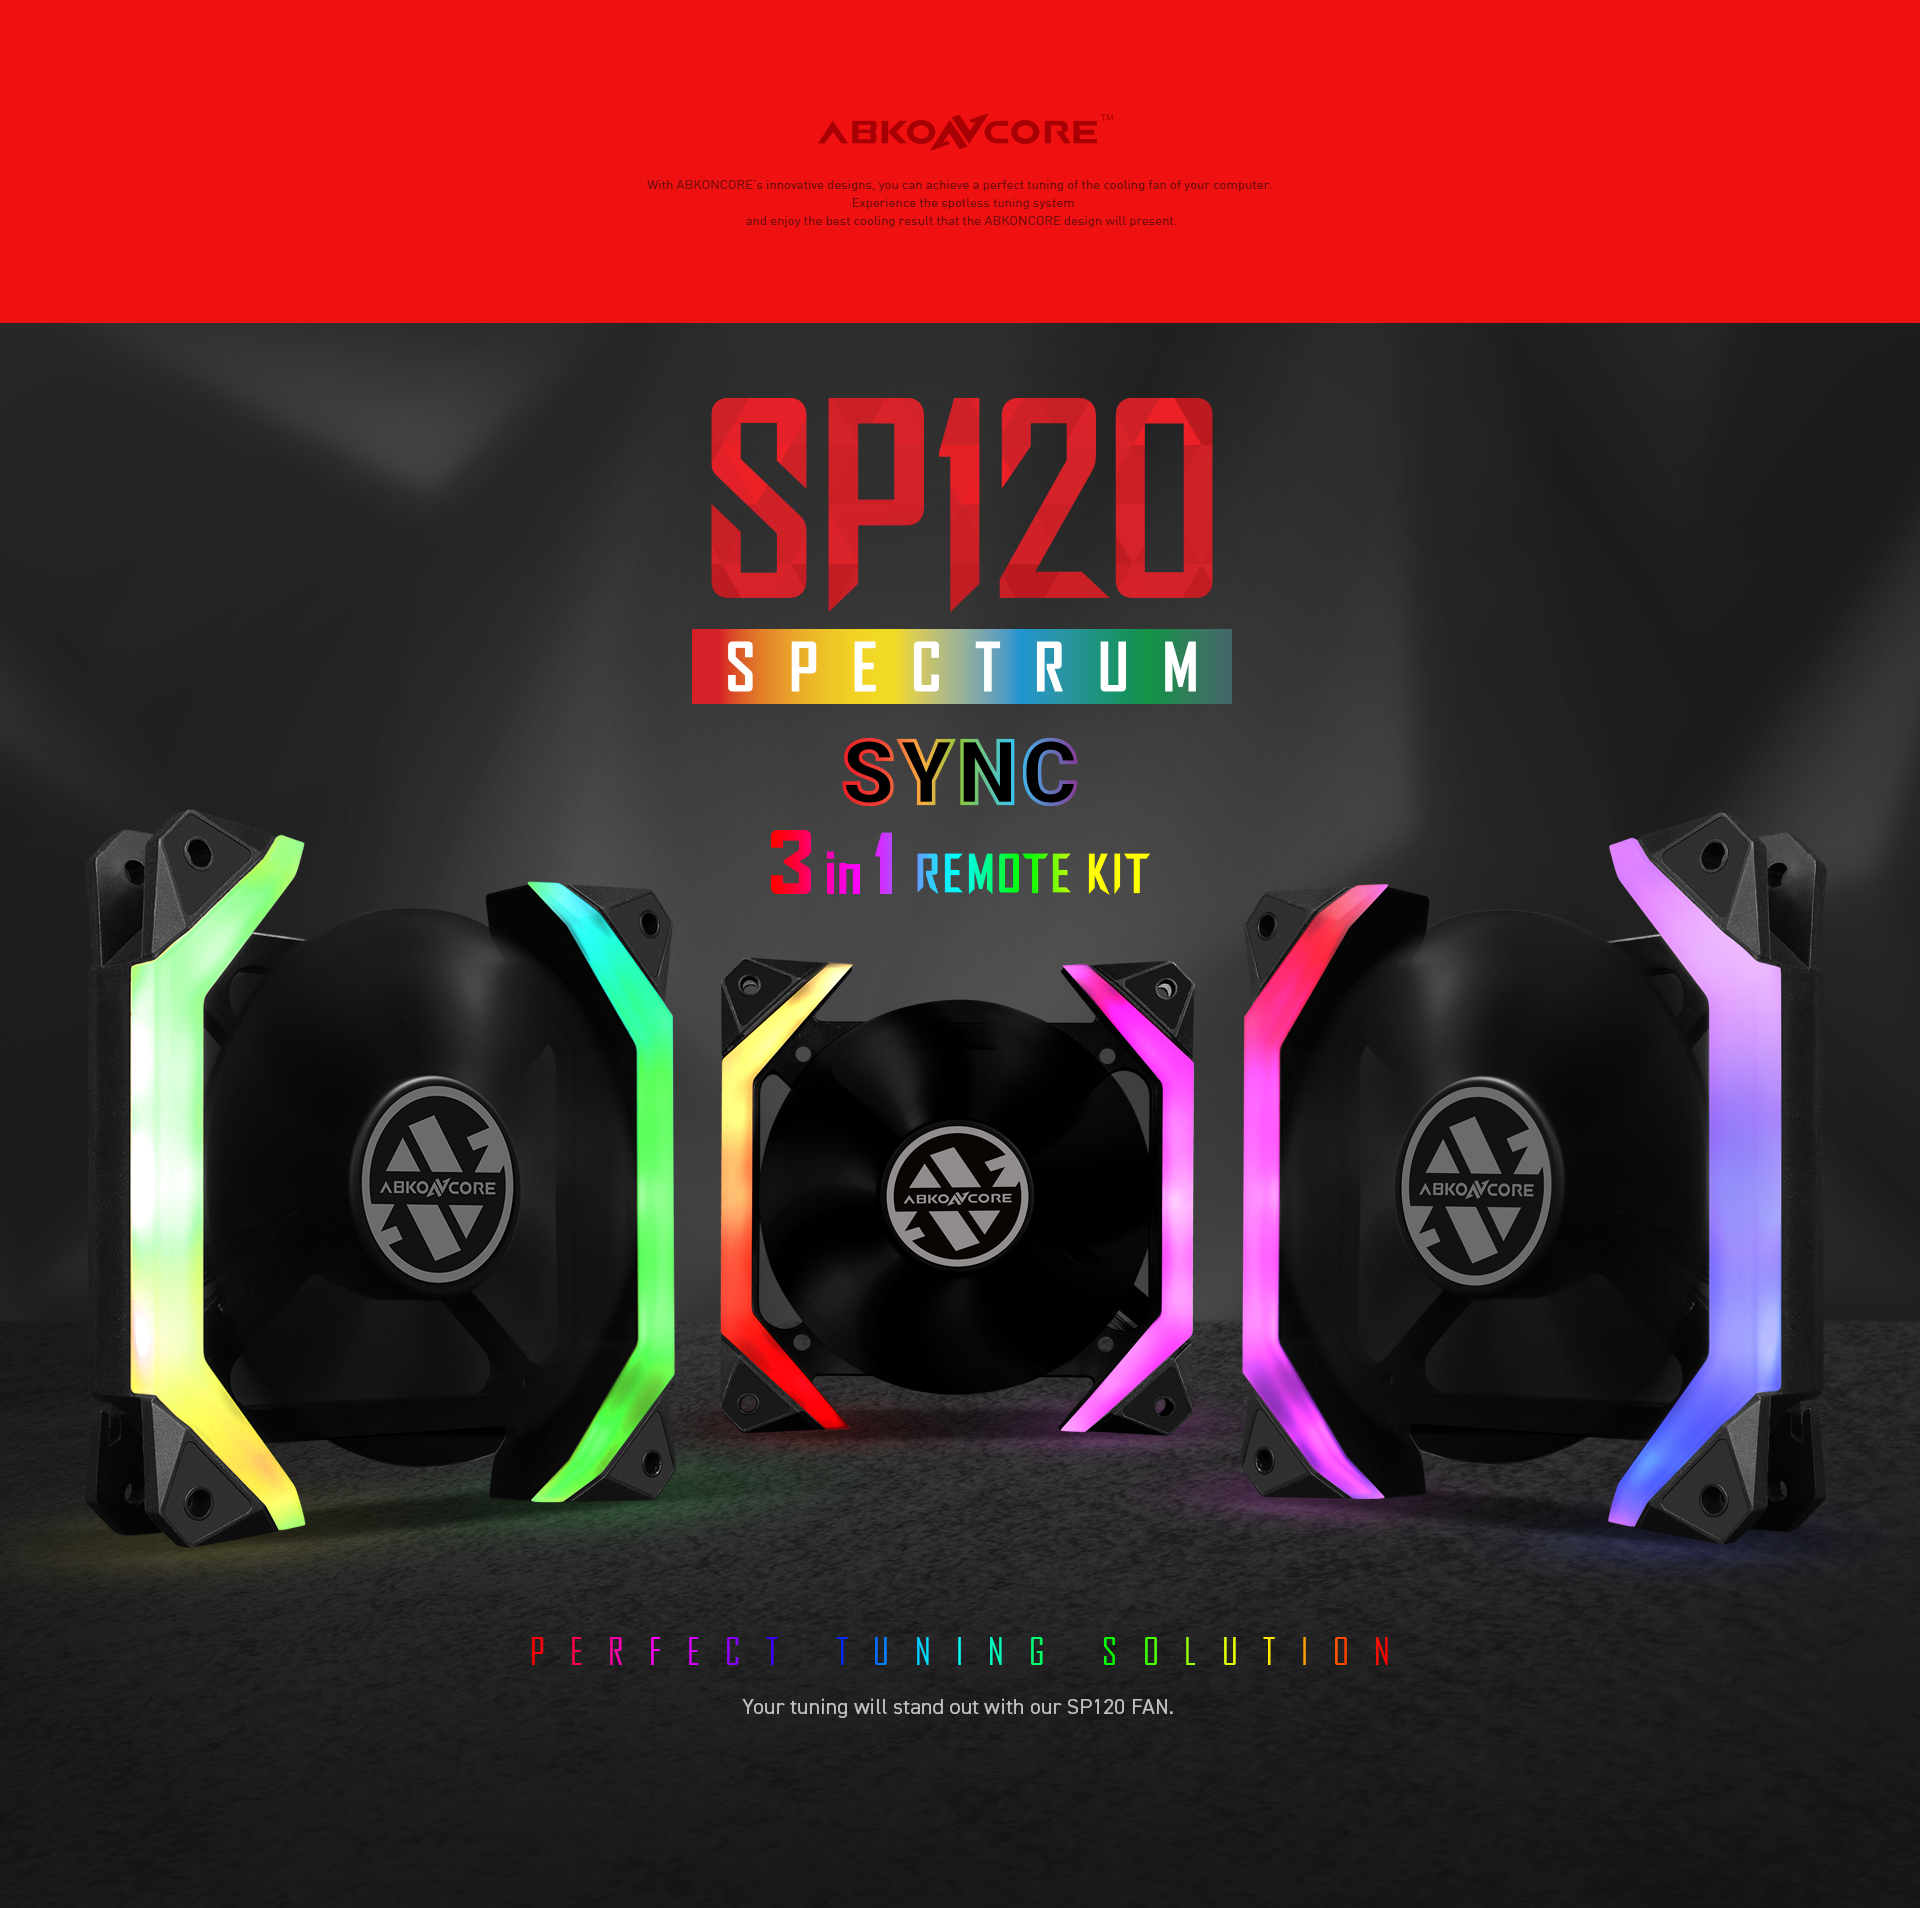 sp120 spectrum SYNC 3in1 db 01